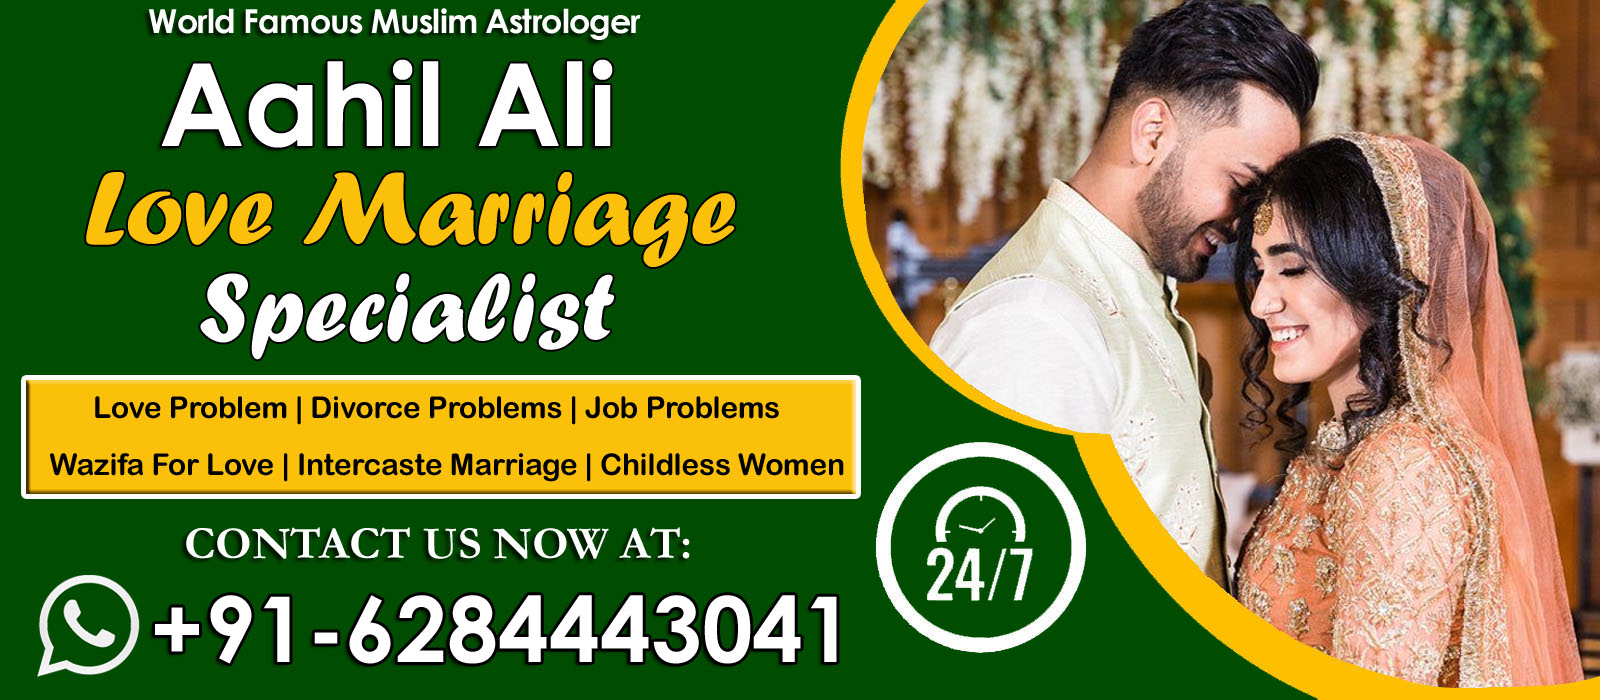 World Famous Astrologer Aahil Ali Ji +91-6284443041